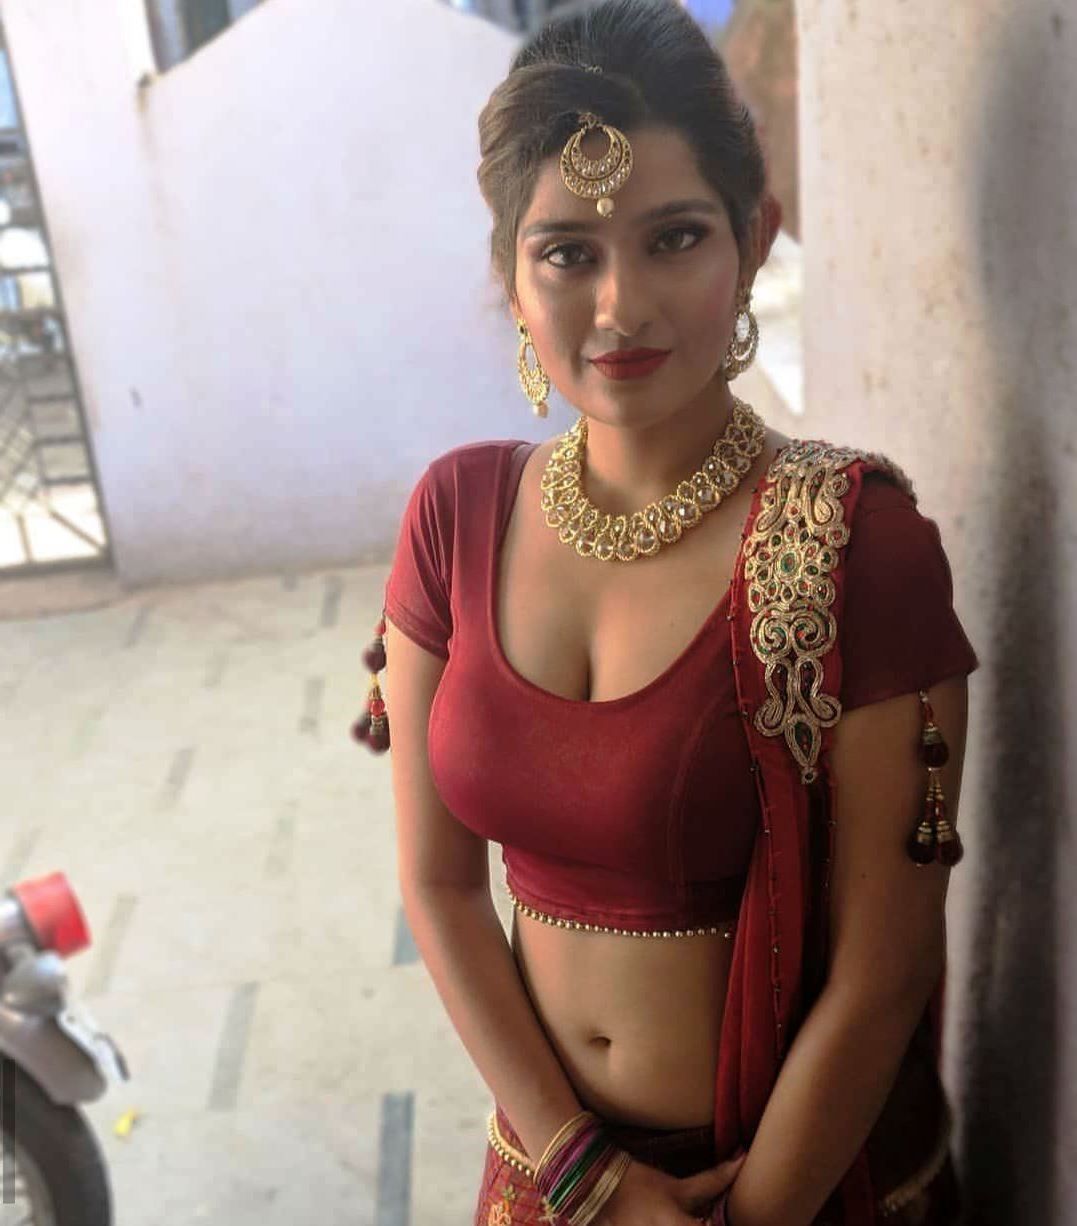 Hot Indian Girl - Hot and Sexy Indian Girls with Shayari.